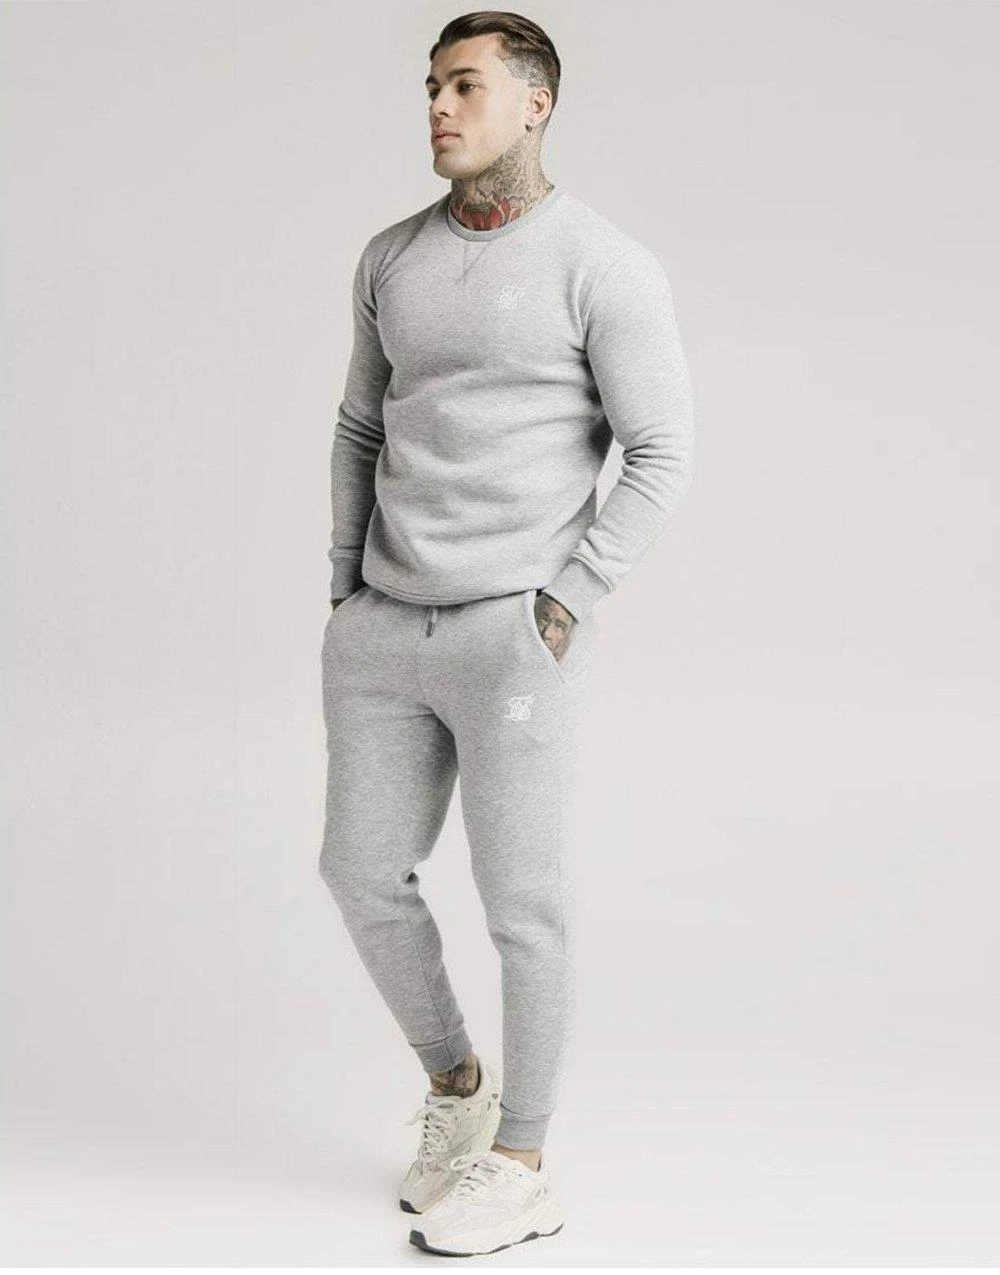 SikSilk pantalones de chándal para hombre, ropa para correr, color gris|Pantalones deportivos| - AliExpress